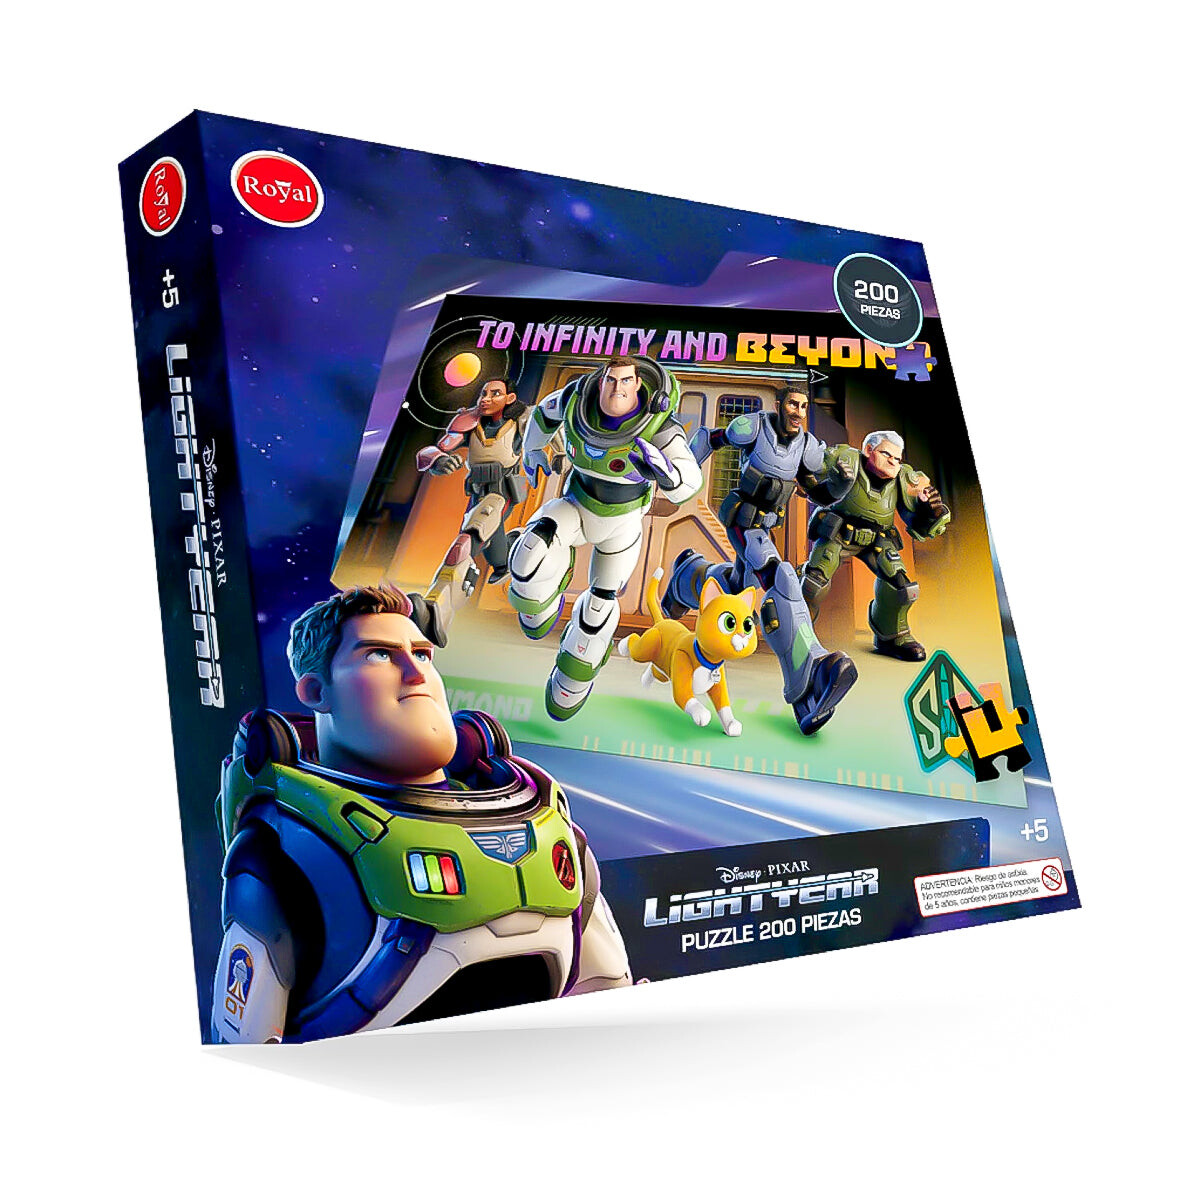 Puzzle Buzz Lightyear Disney 200 Pzs Royal Toy Story 